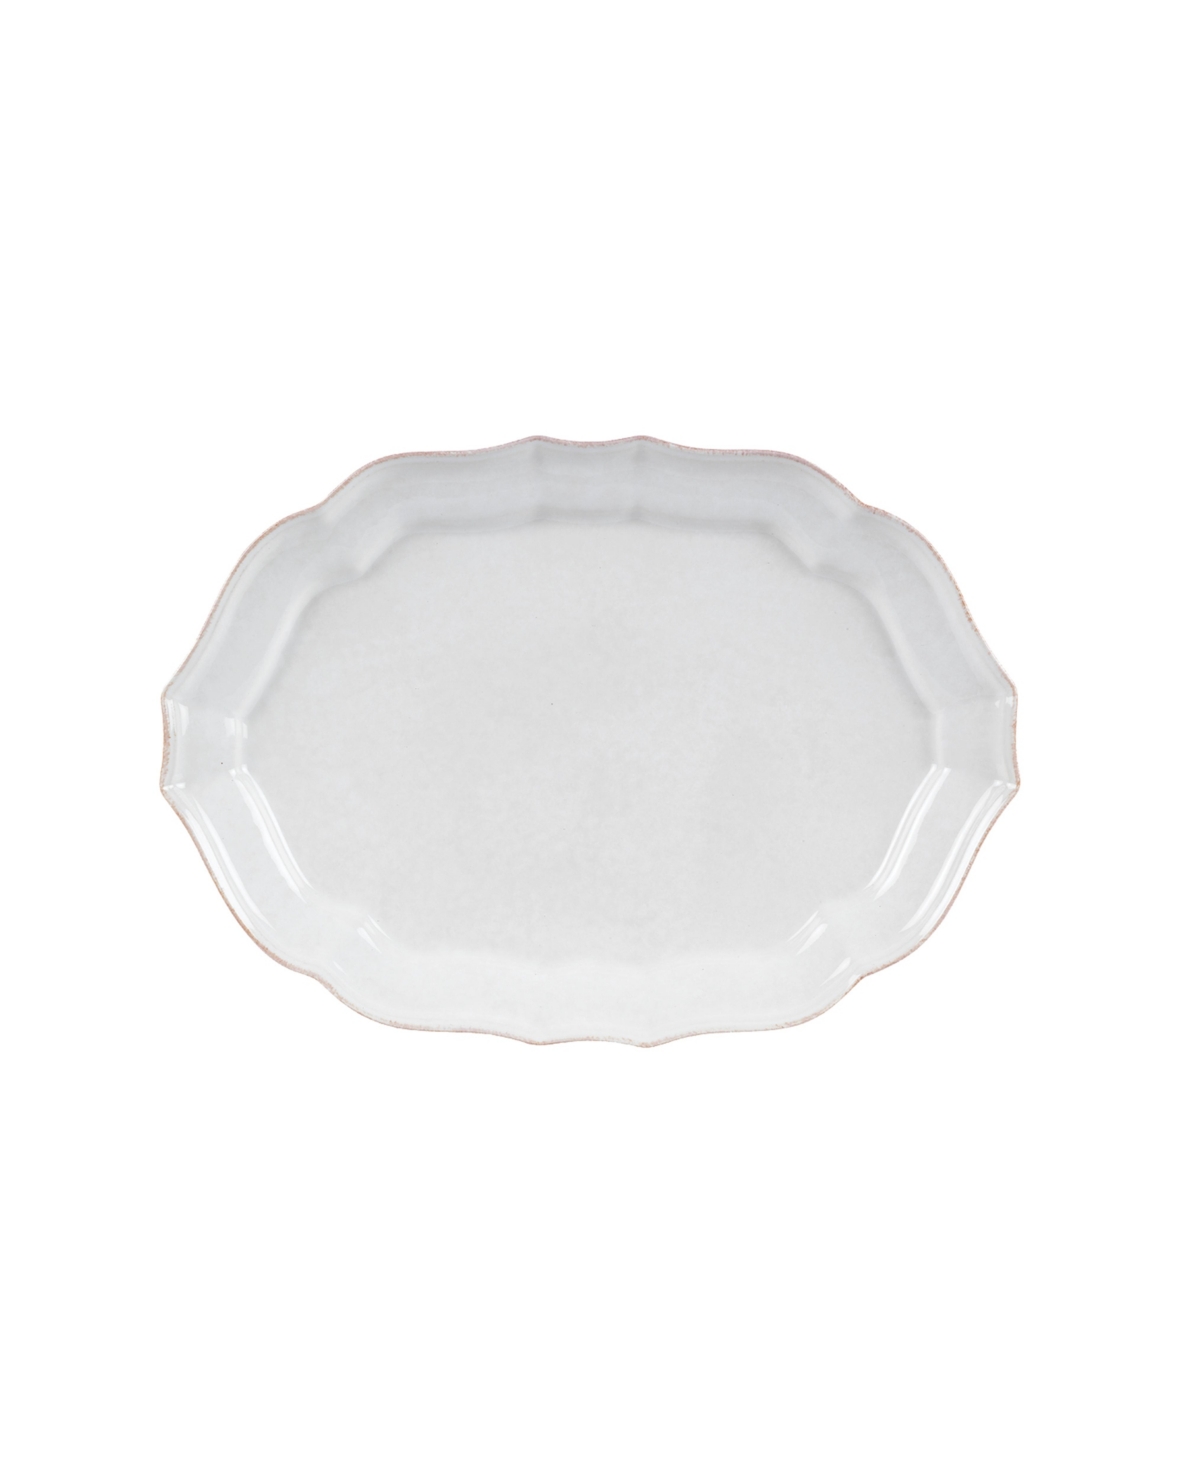 Impressions Oval Platter - White